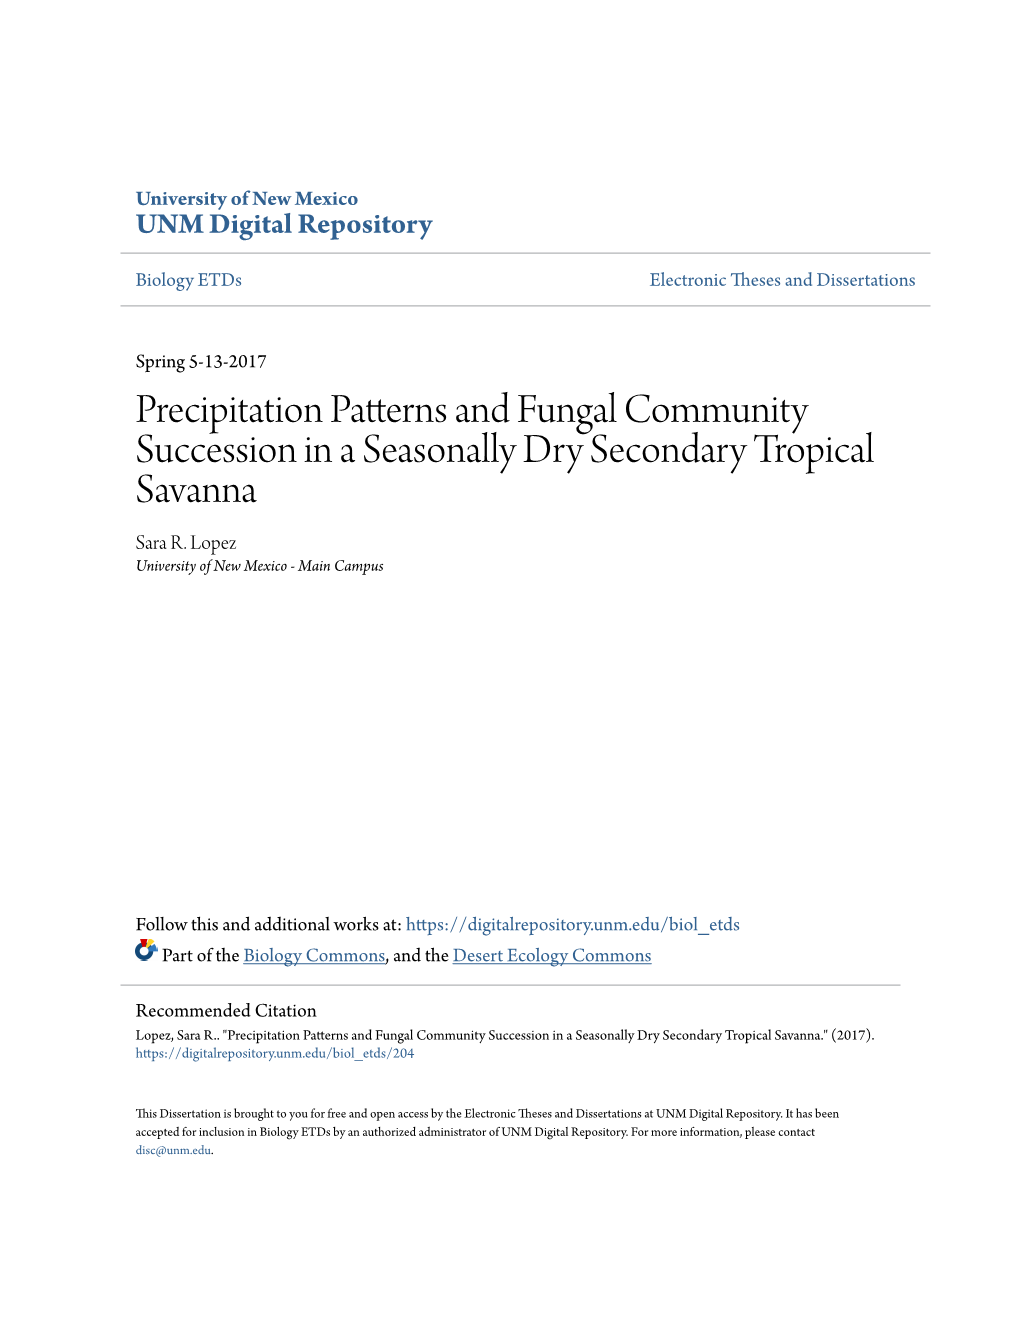 Precipitation Patterns and Fungal Community Succession in a Seasonally Dry Secondary Tropical Savanna Sara R